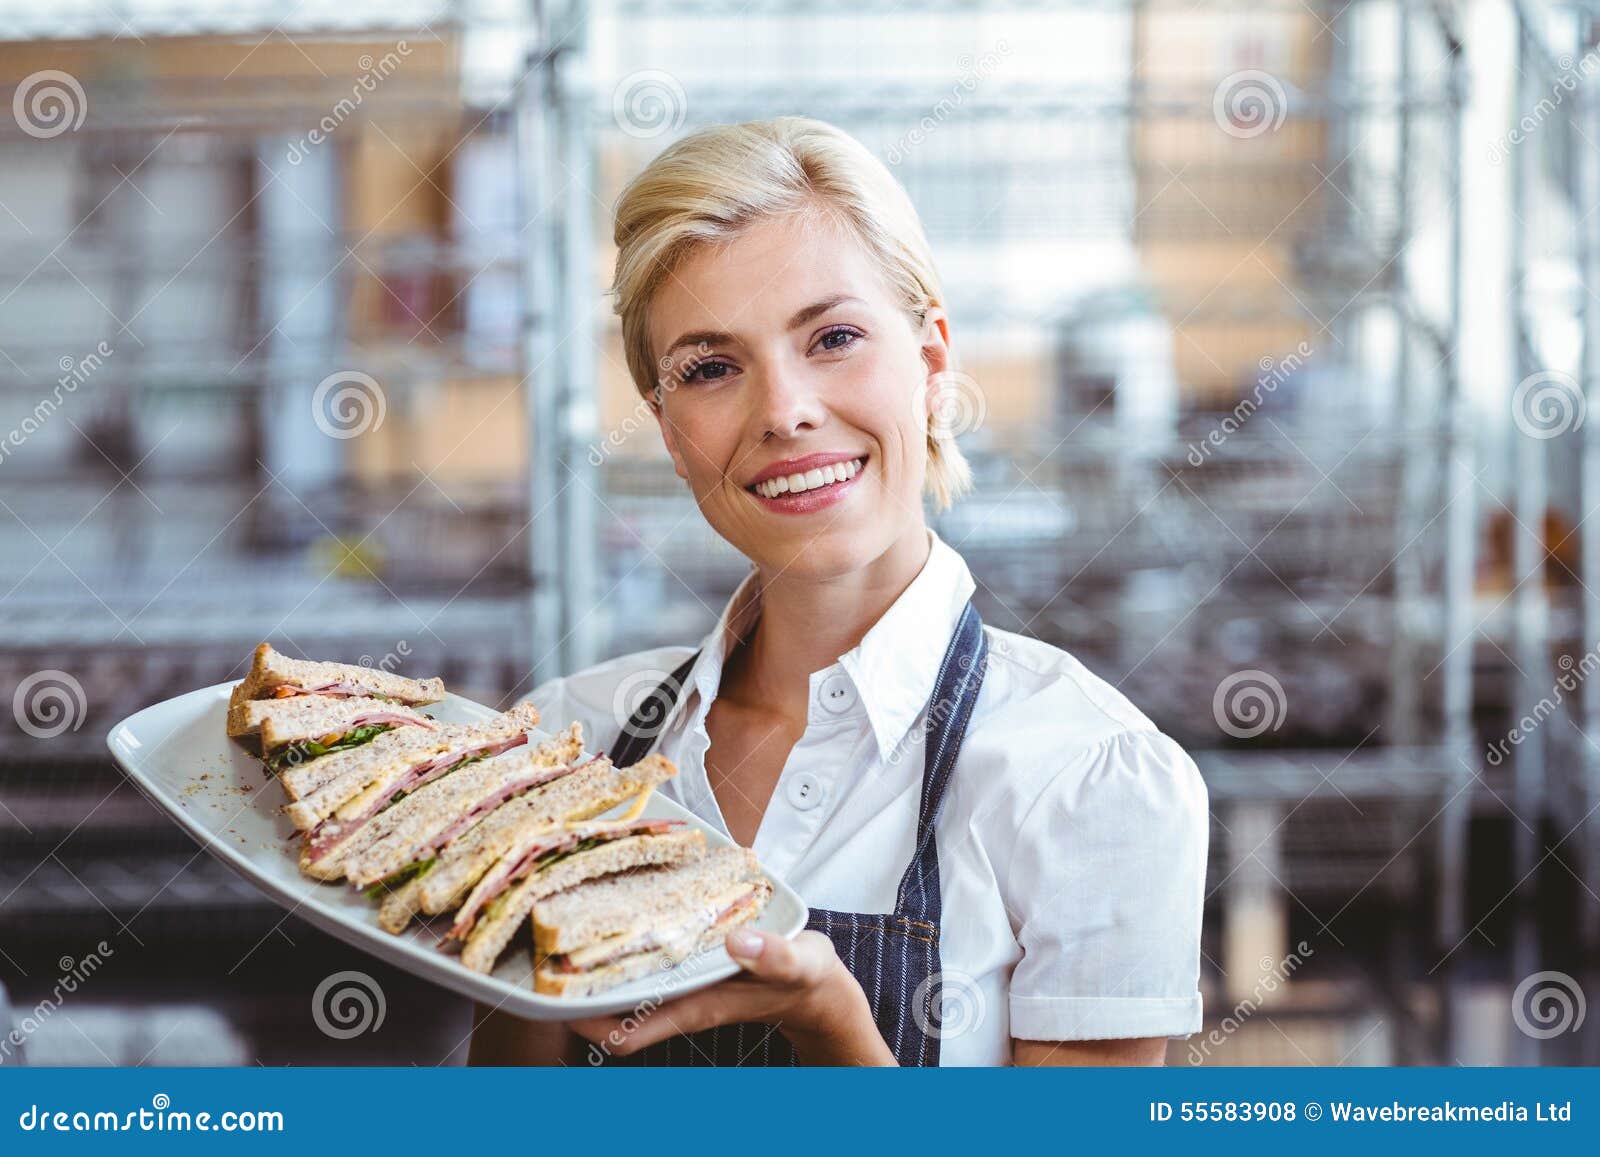 selfassured female waitress smiling